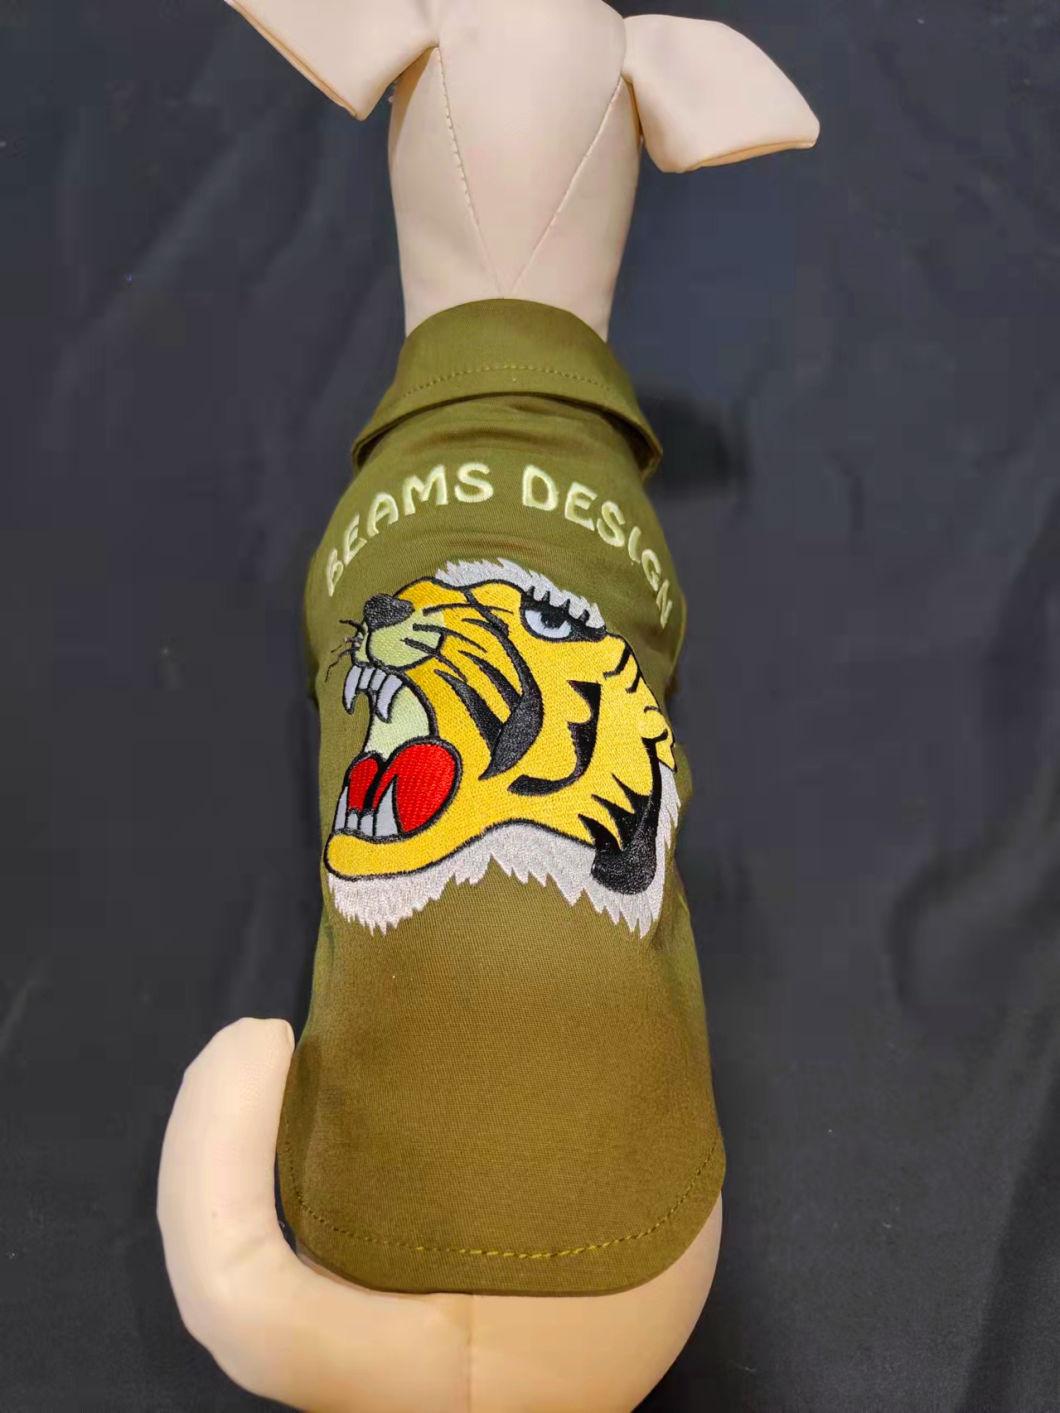 Beams Design Tiger Head Embroidery Pet Shirt Dog Clothes Dog Clothing